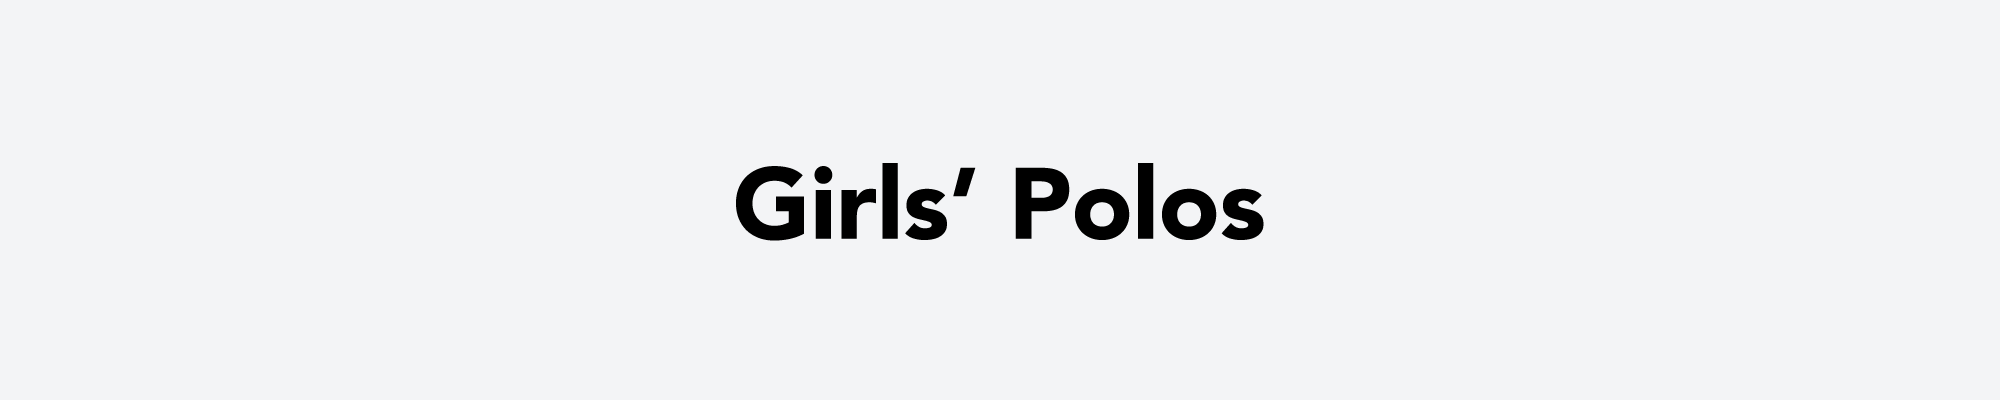 Girls' Polos